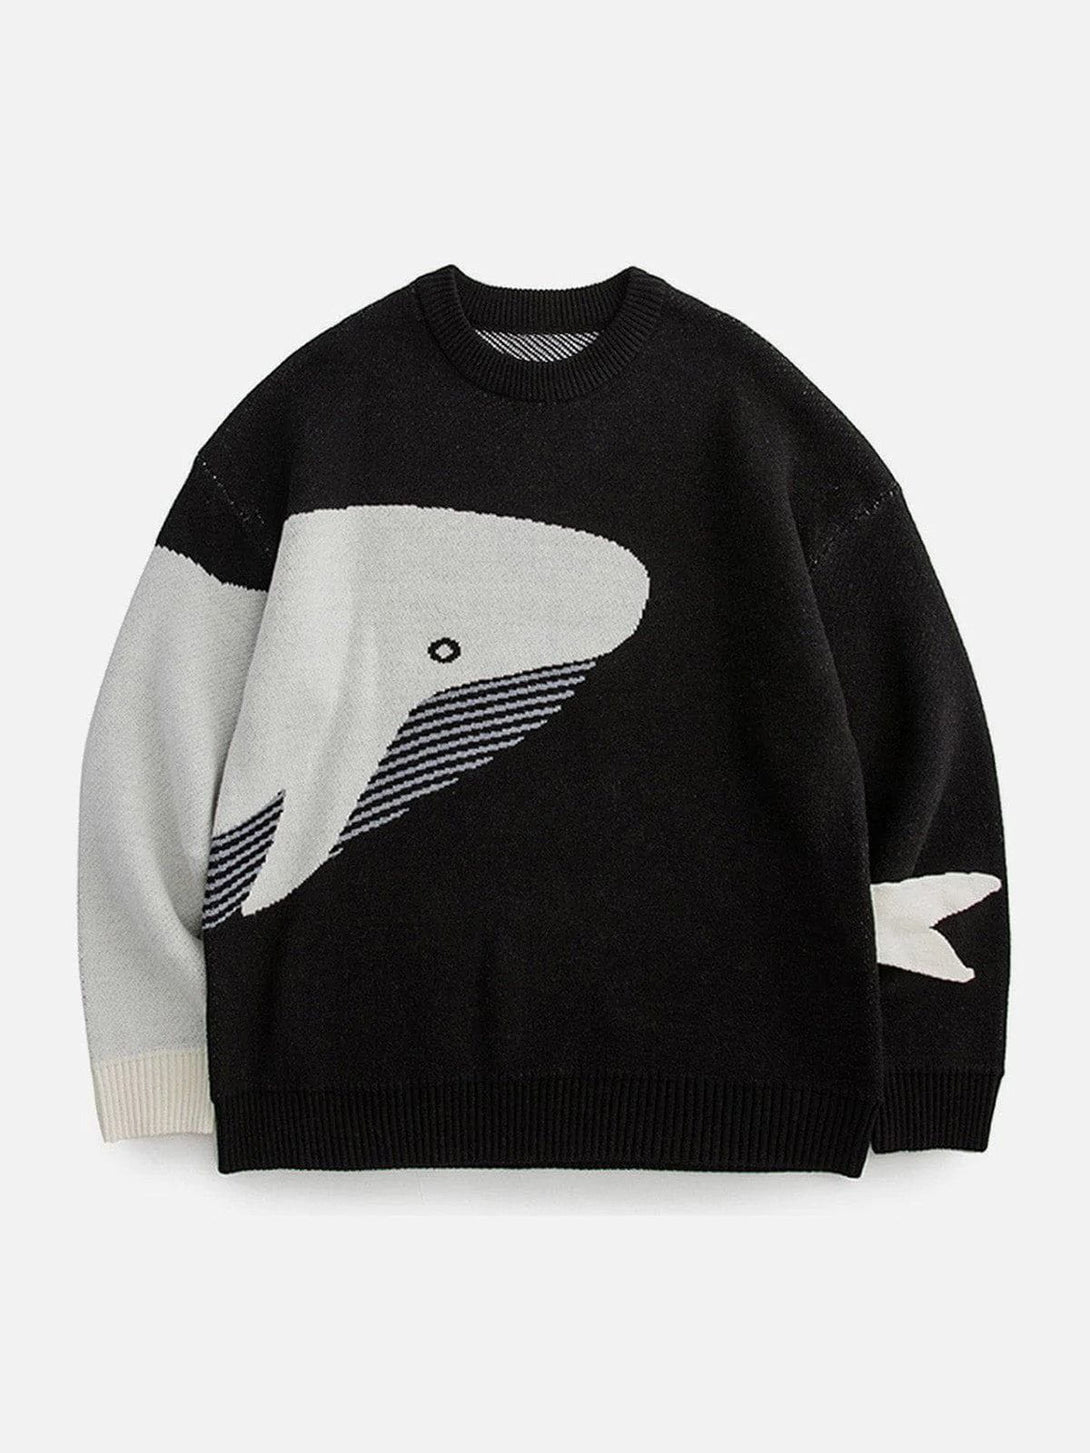 AlanBalen® - "The Loneliest Whale" Knit Sweater AlanBalen